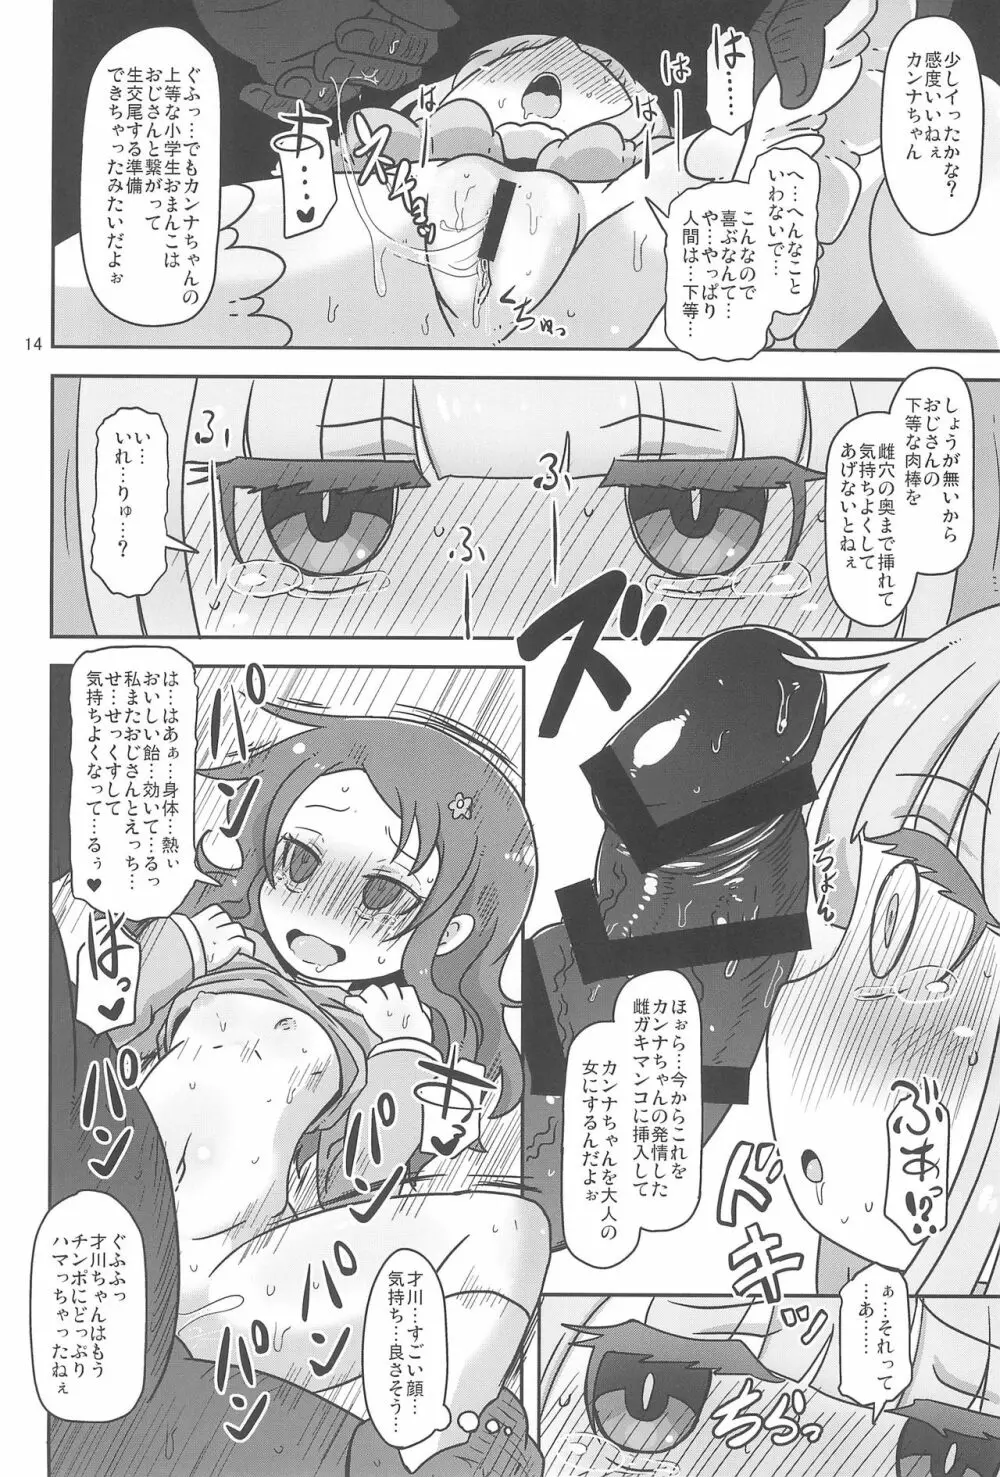 Dragonic Lolita Bomb! - page14